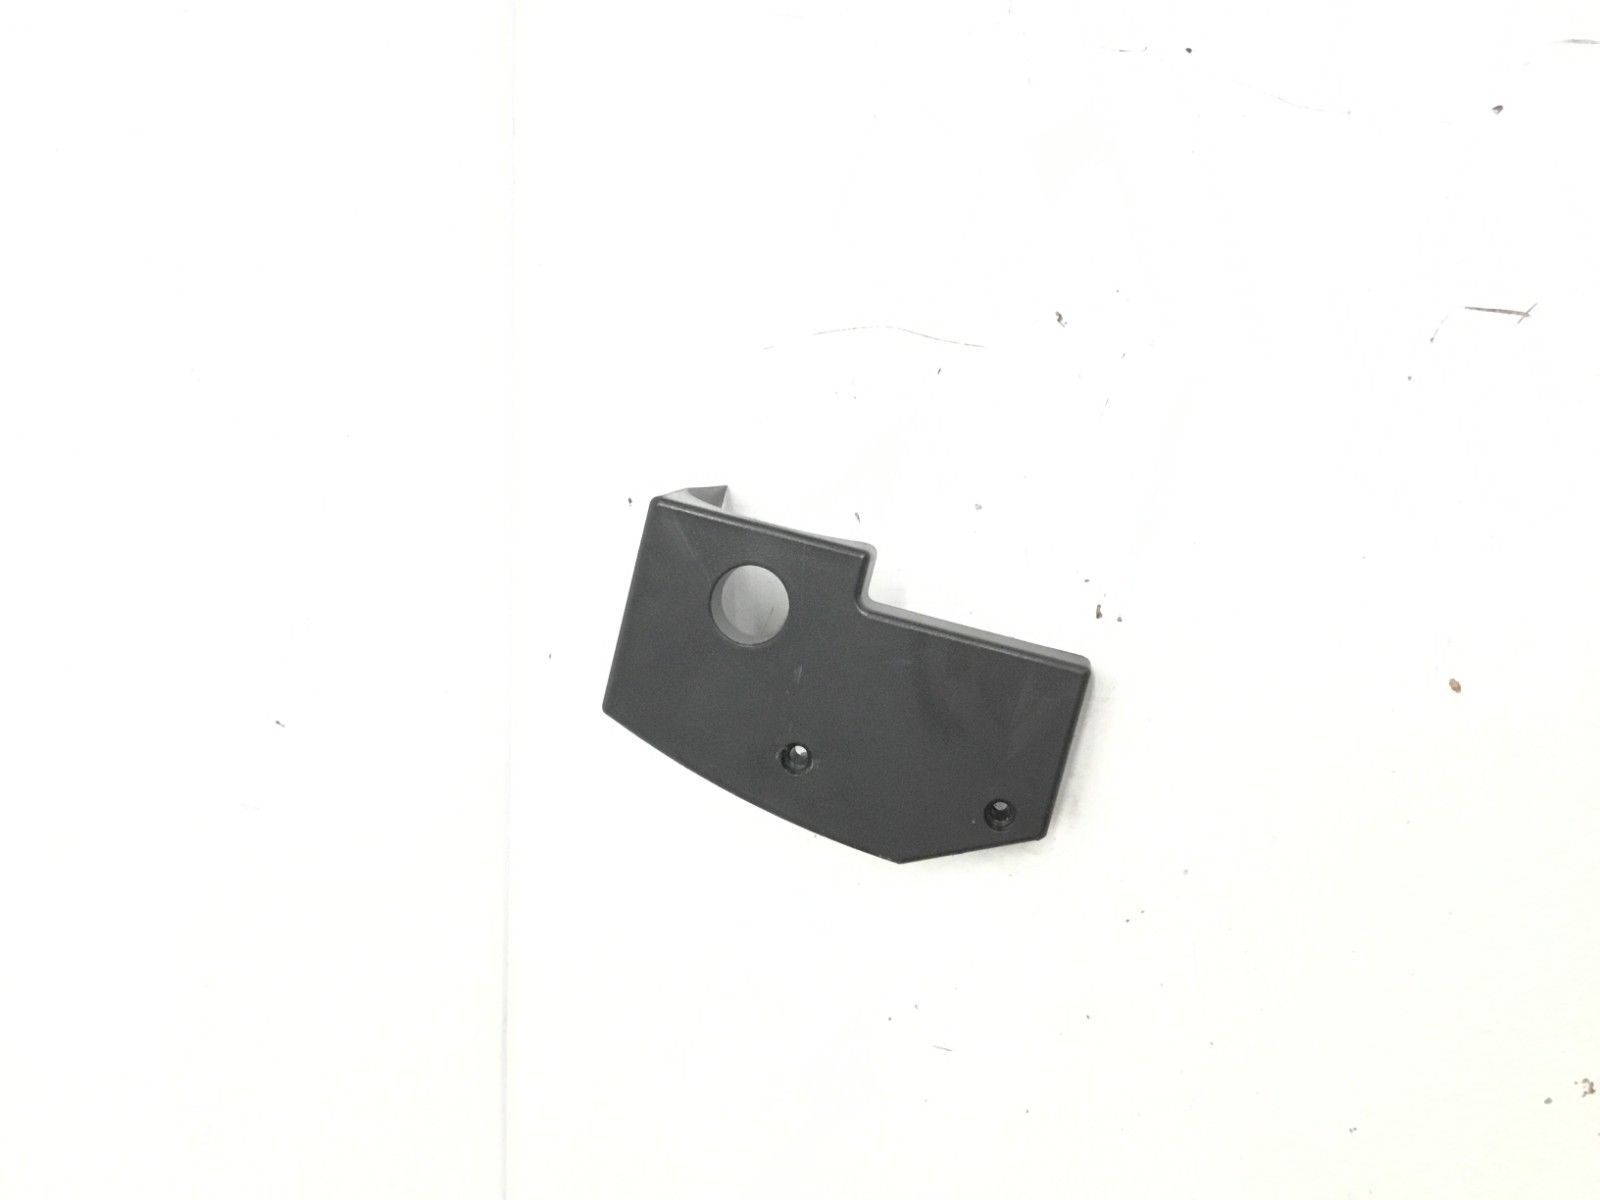 Precor 9.4x M9.45 Treadmill OEM Left Plastic Endcap 36955-102 (Used)